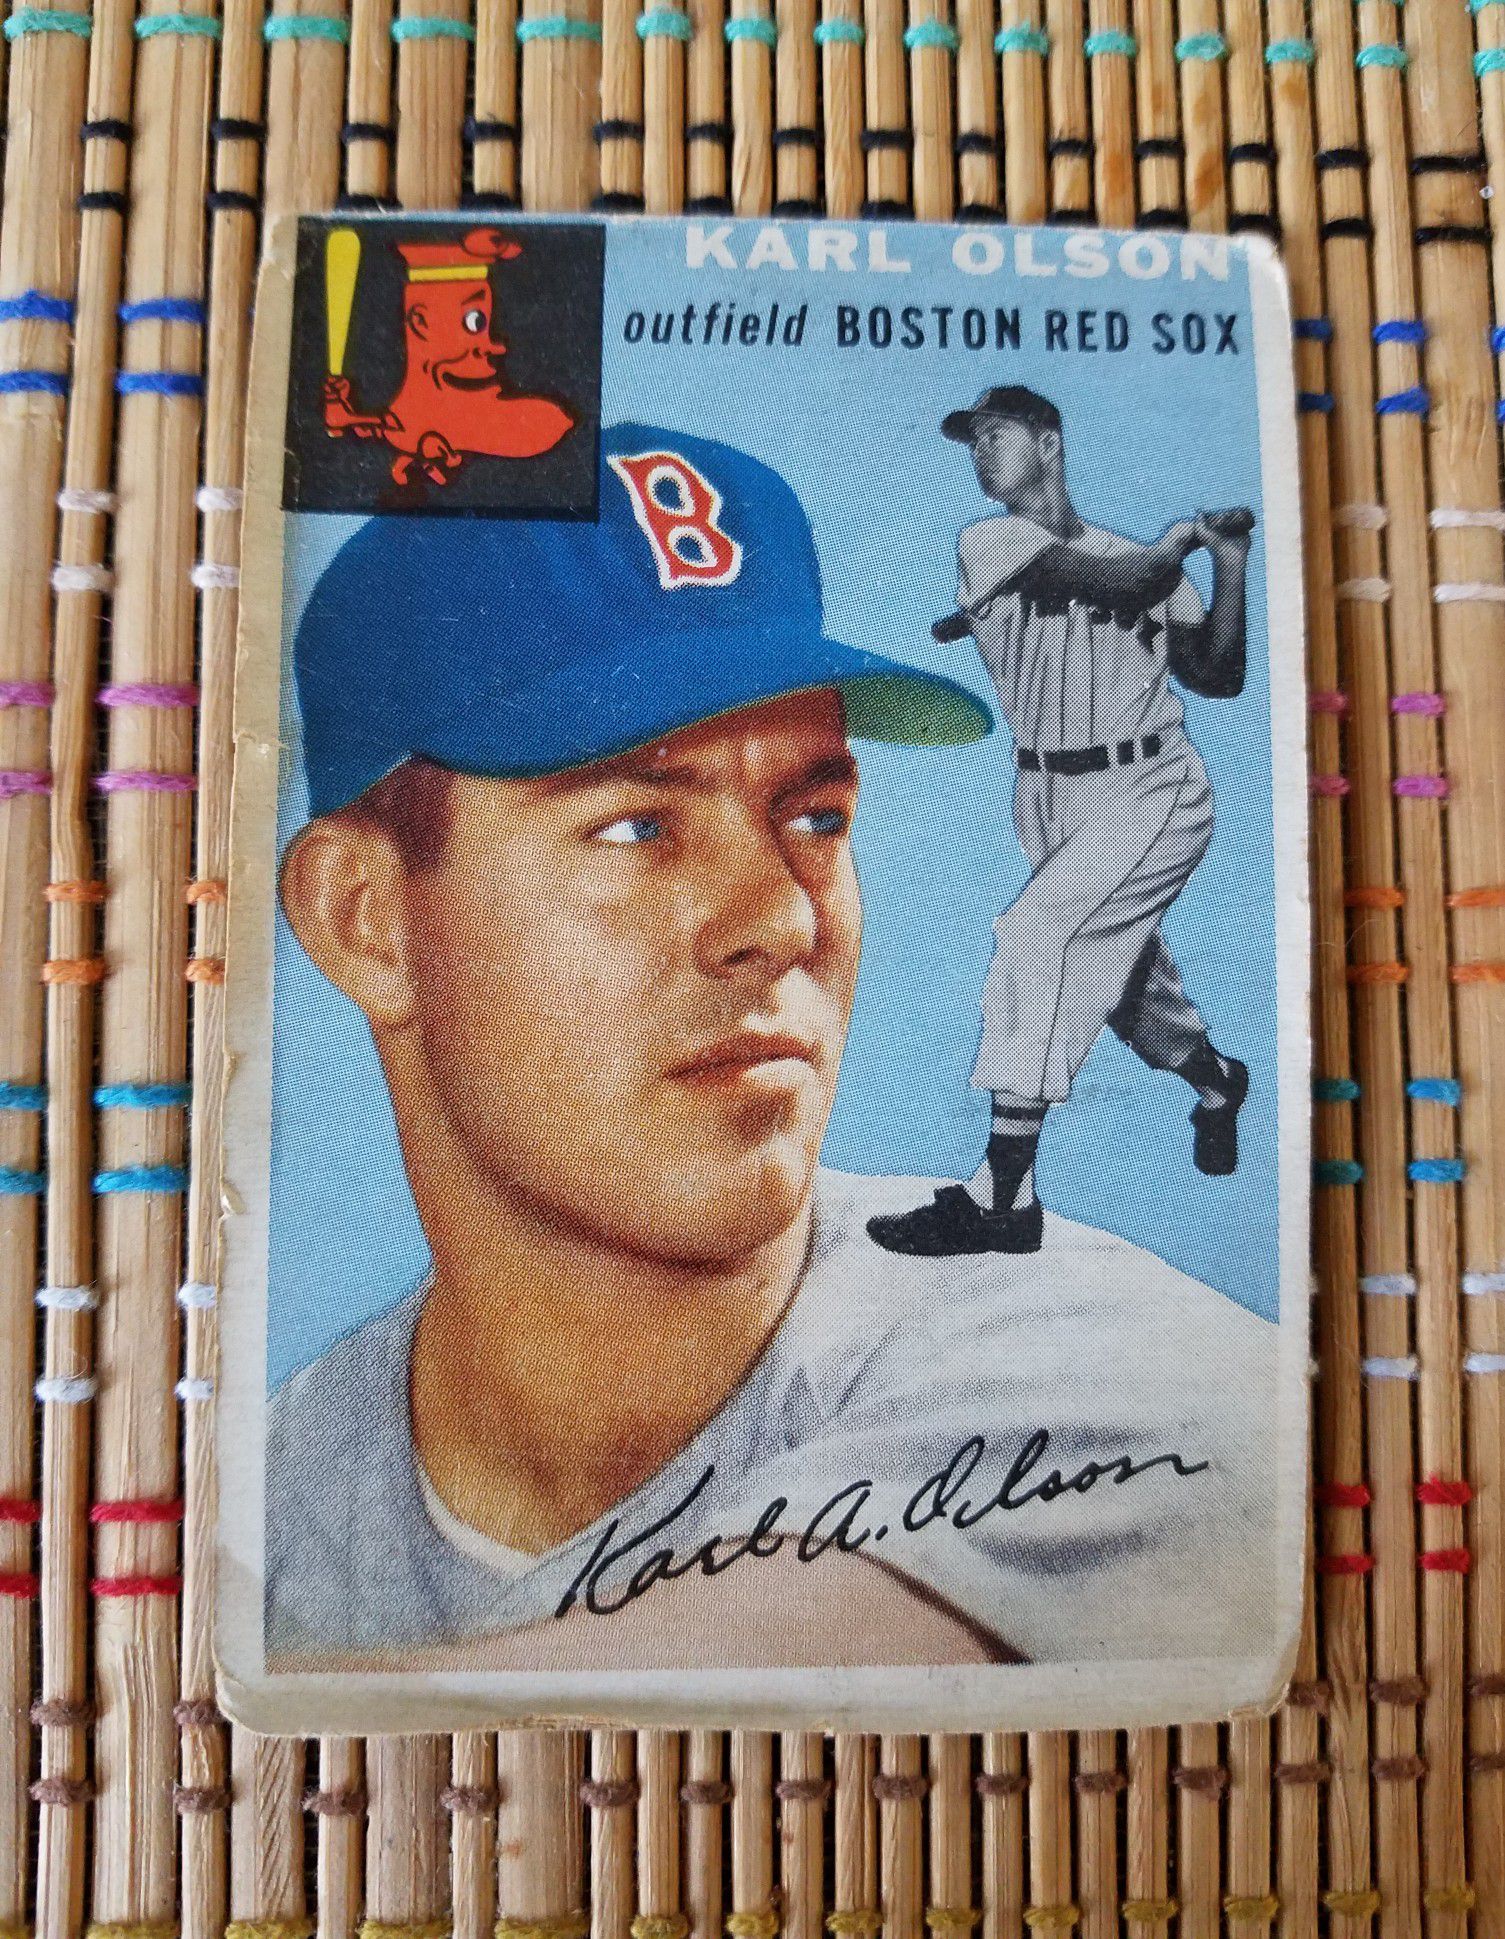 Topps 1954 - Carl Olson - Boston Red Sox